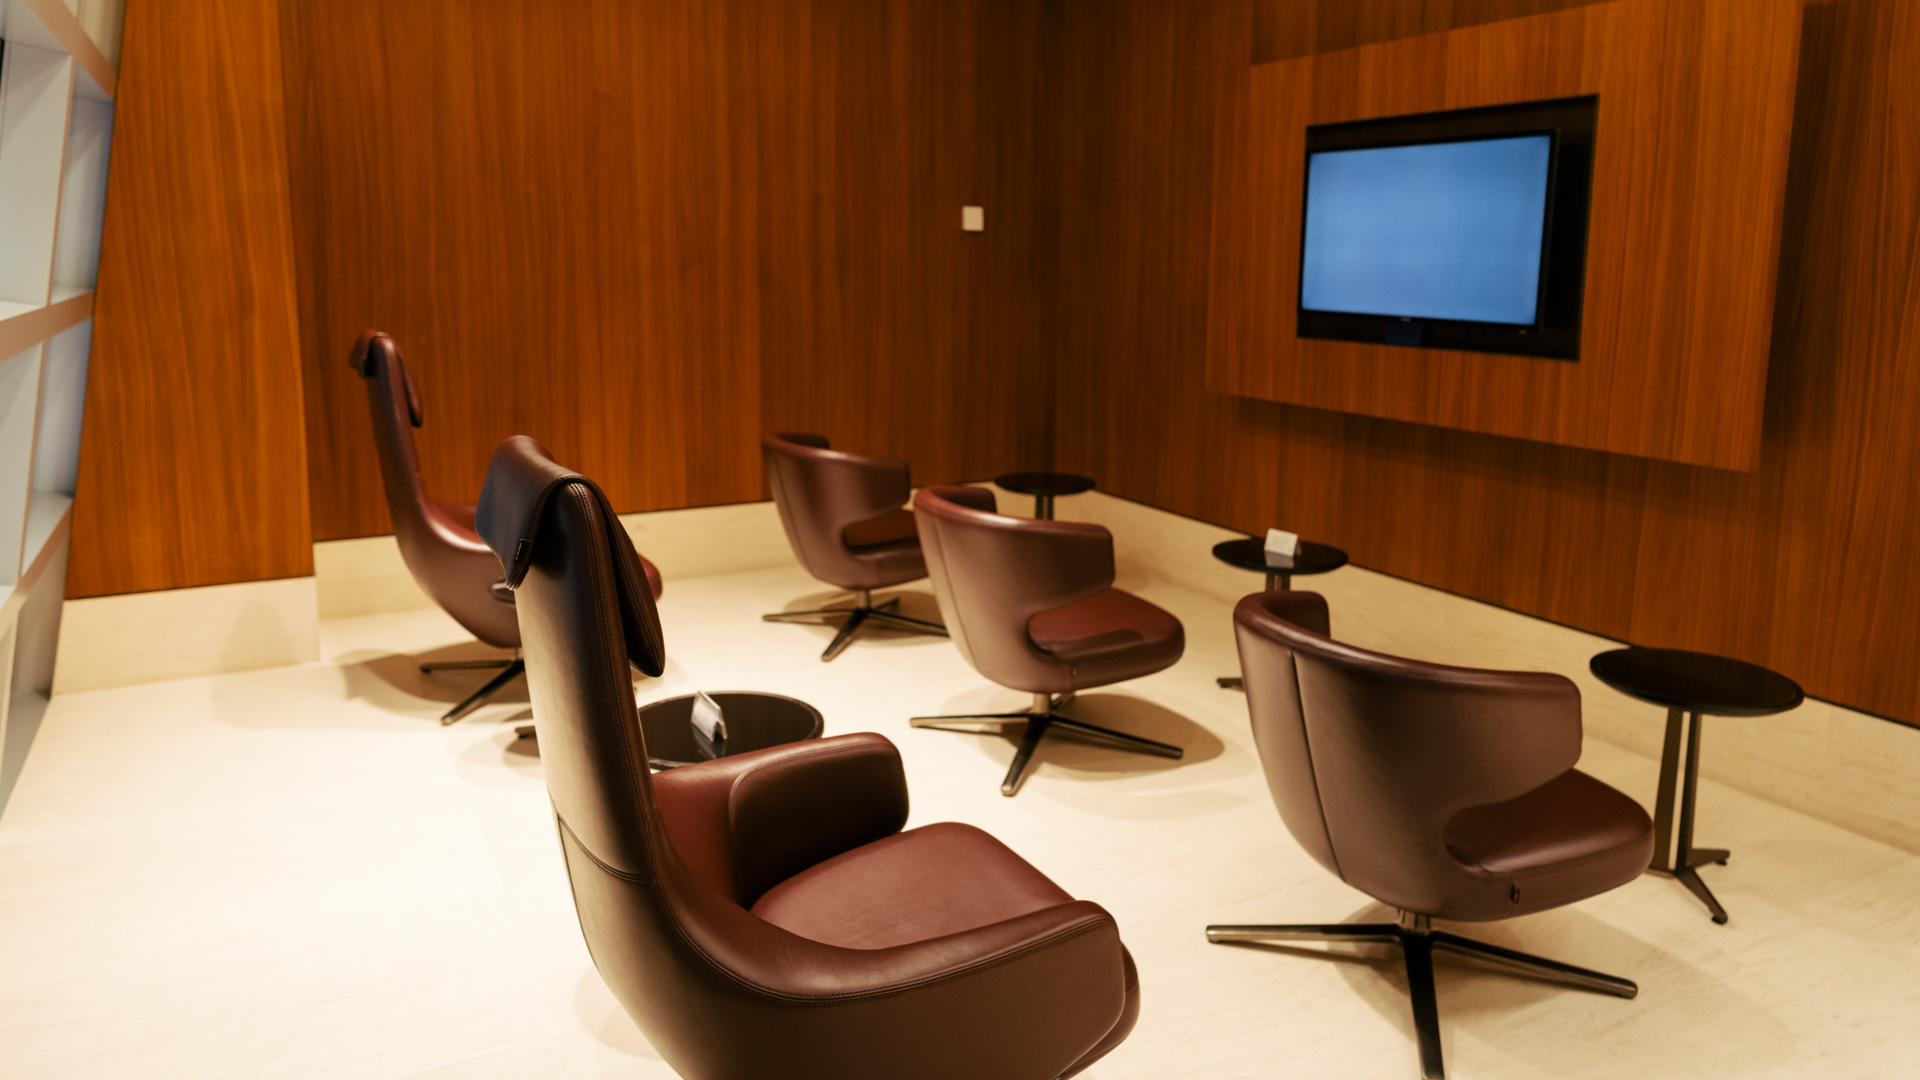 Qatar Airways Arrival Lounge TV room